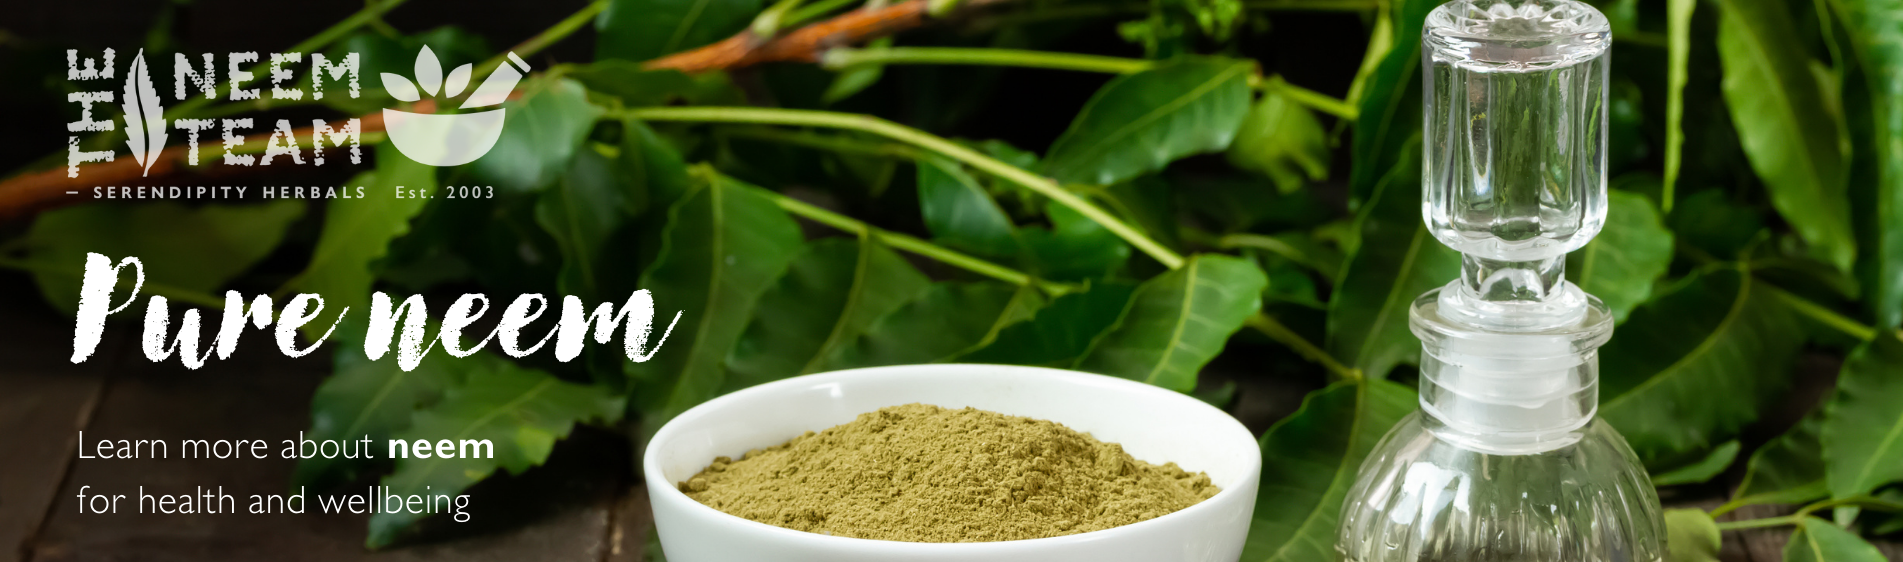 Neem leaves and bowl of neem leaf powder